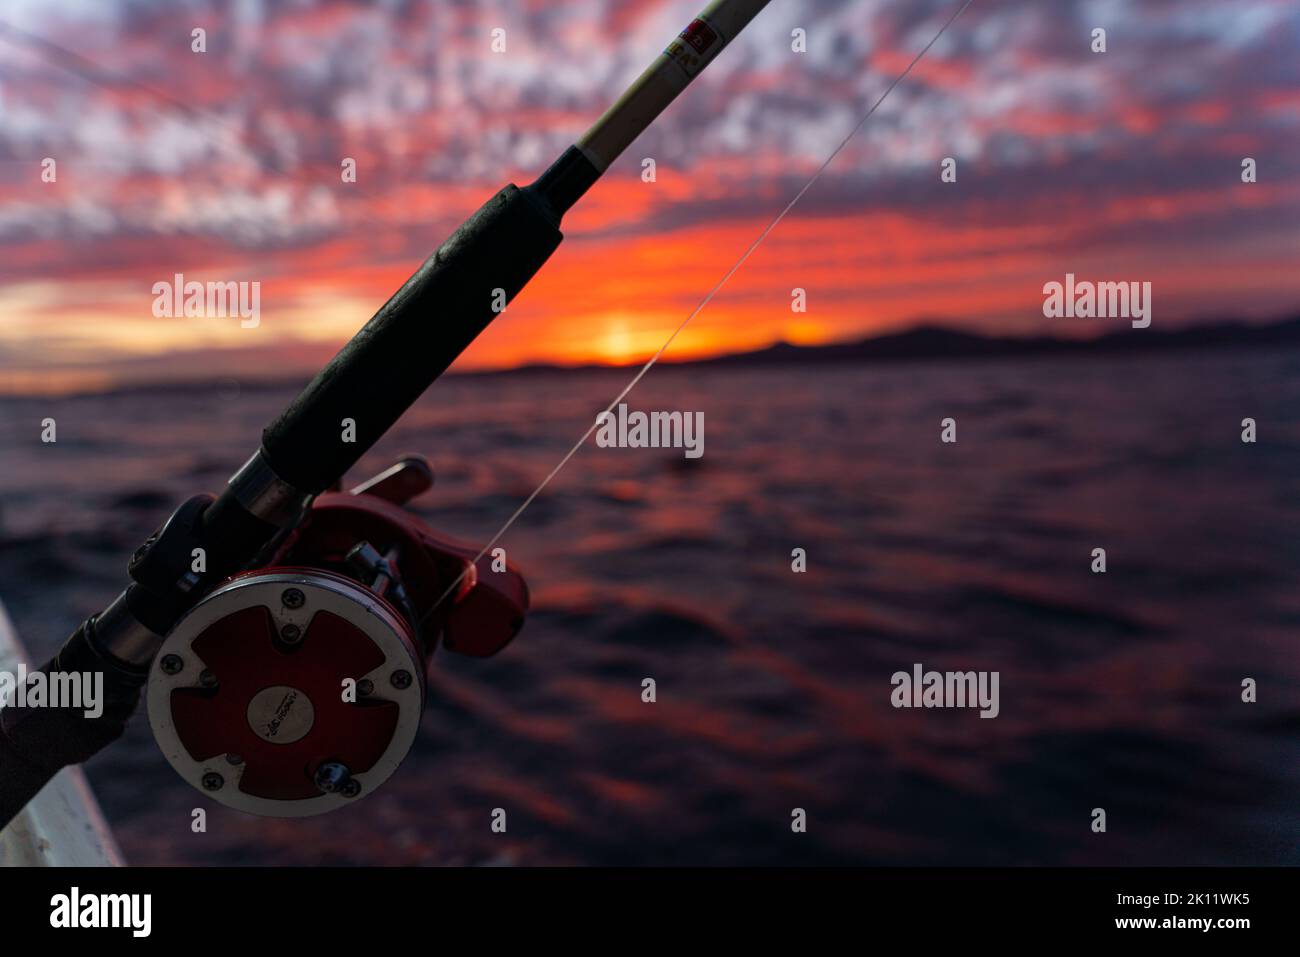 https://c8.alamy.com/comp/2K11WK5/deep-sea-fishing-reel-on-a-boat-during-sunrise-high-quality-photo-2K11WK5.jpg